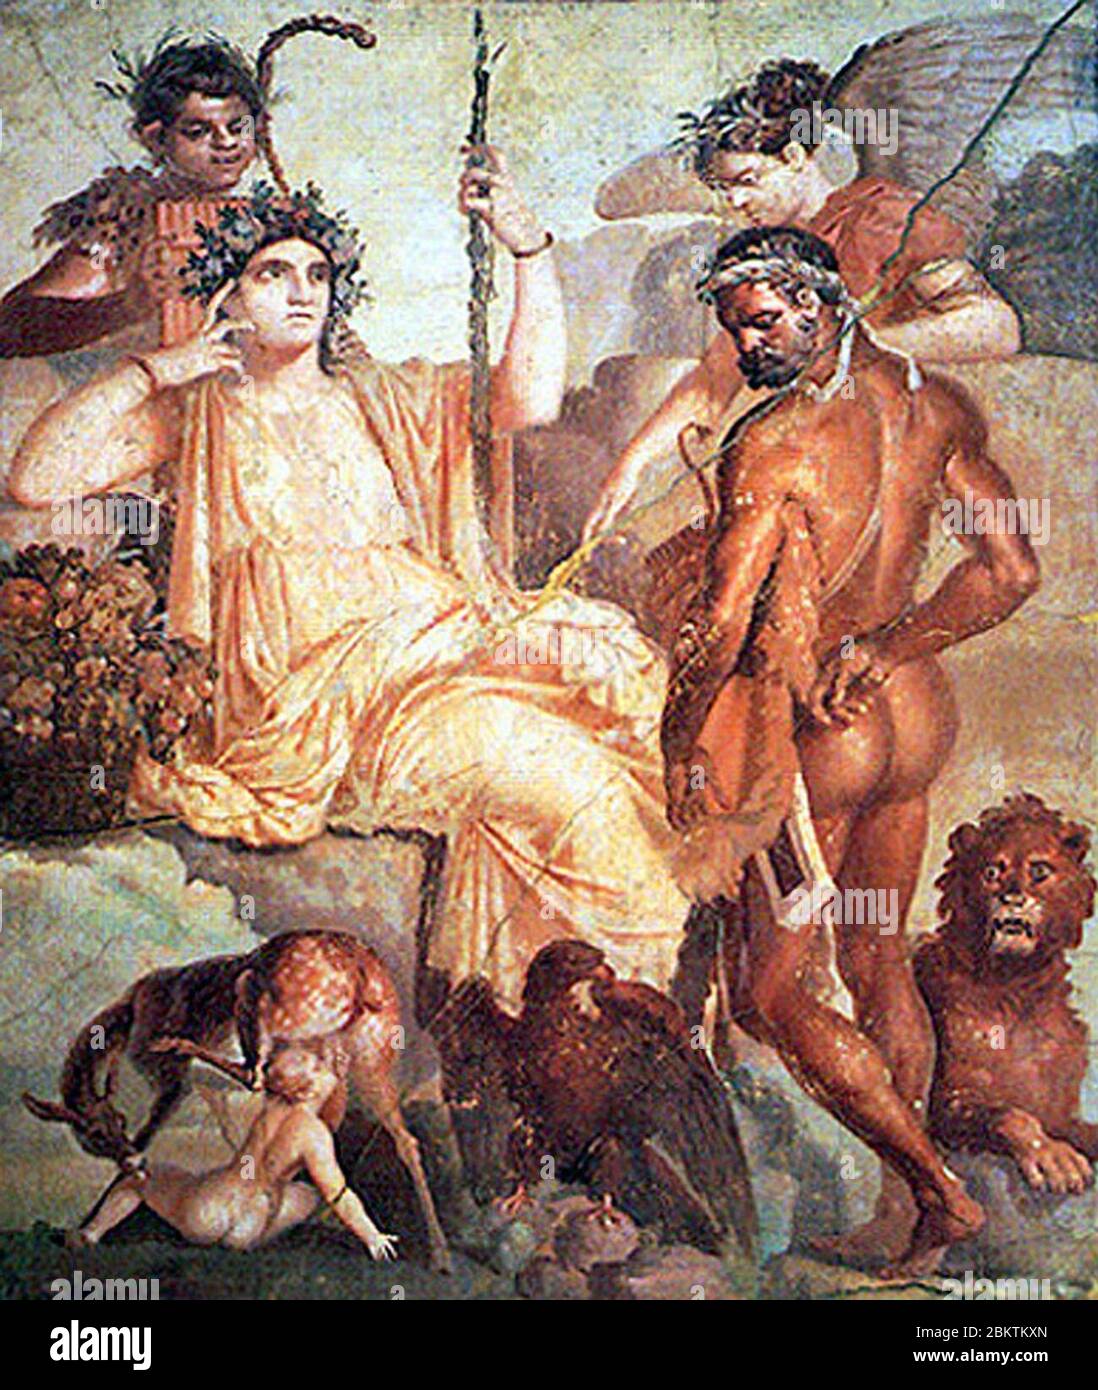 Hércules e Télefo - afresco romano - Herculano. Stock Photo